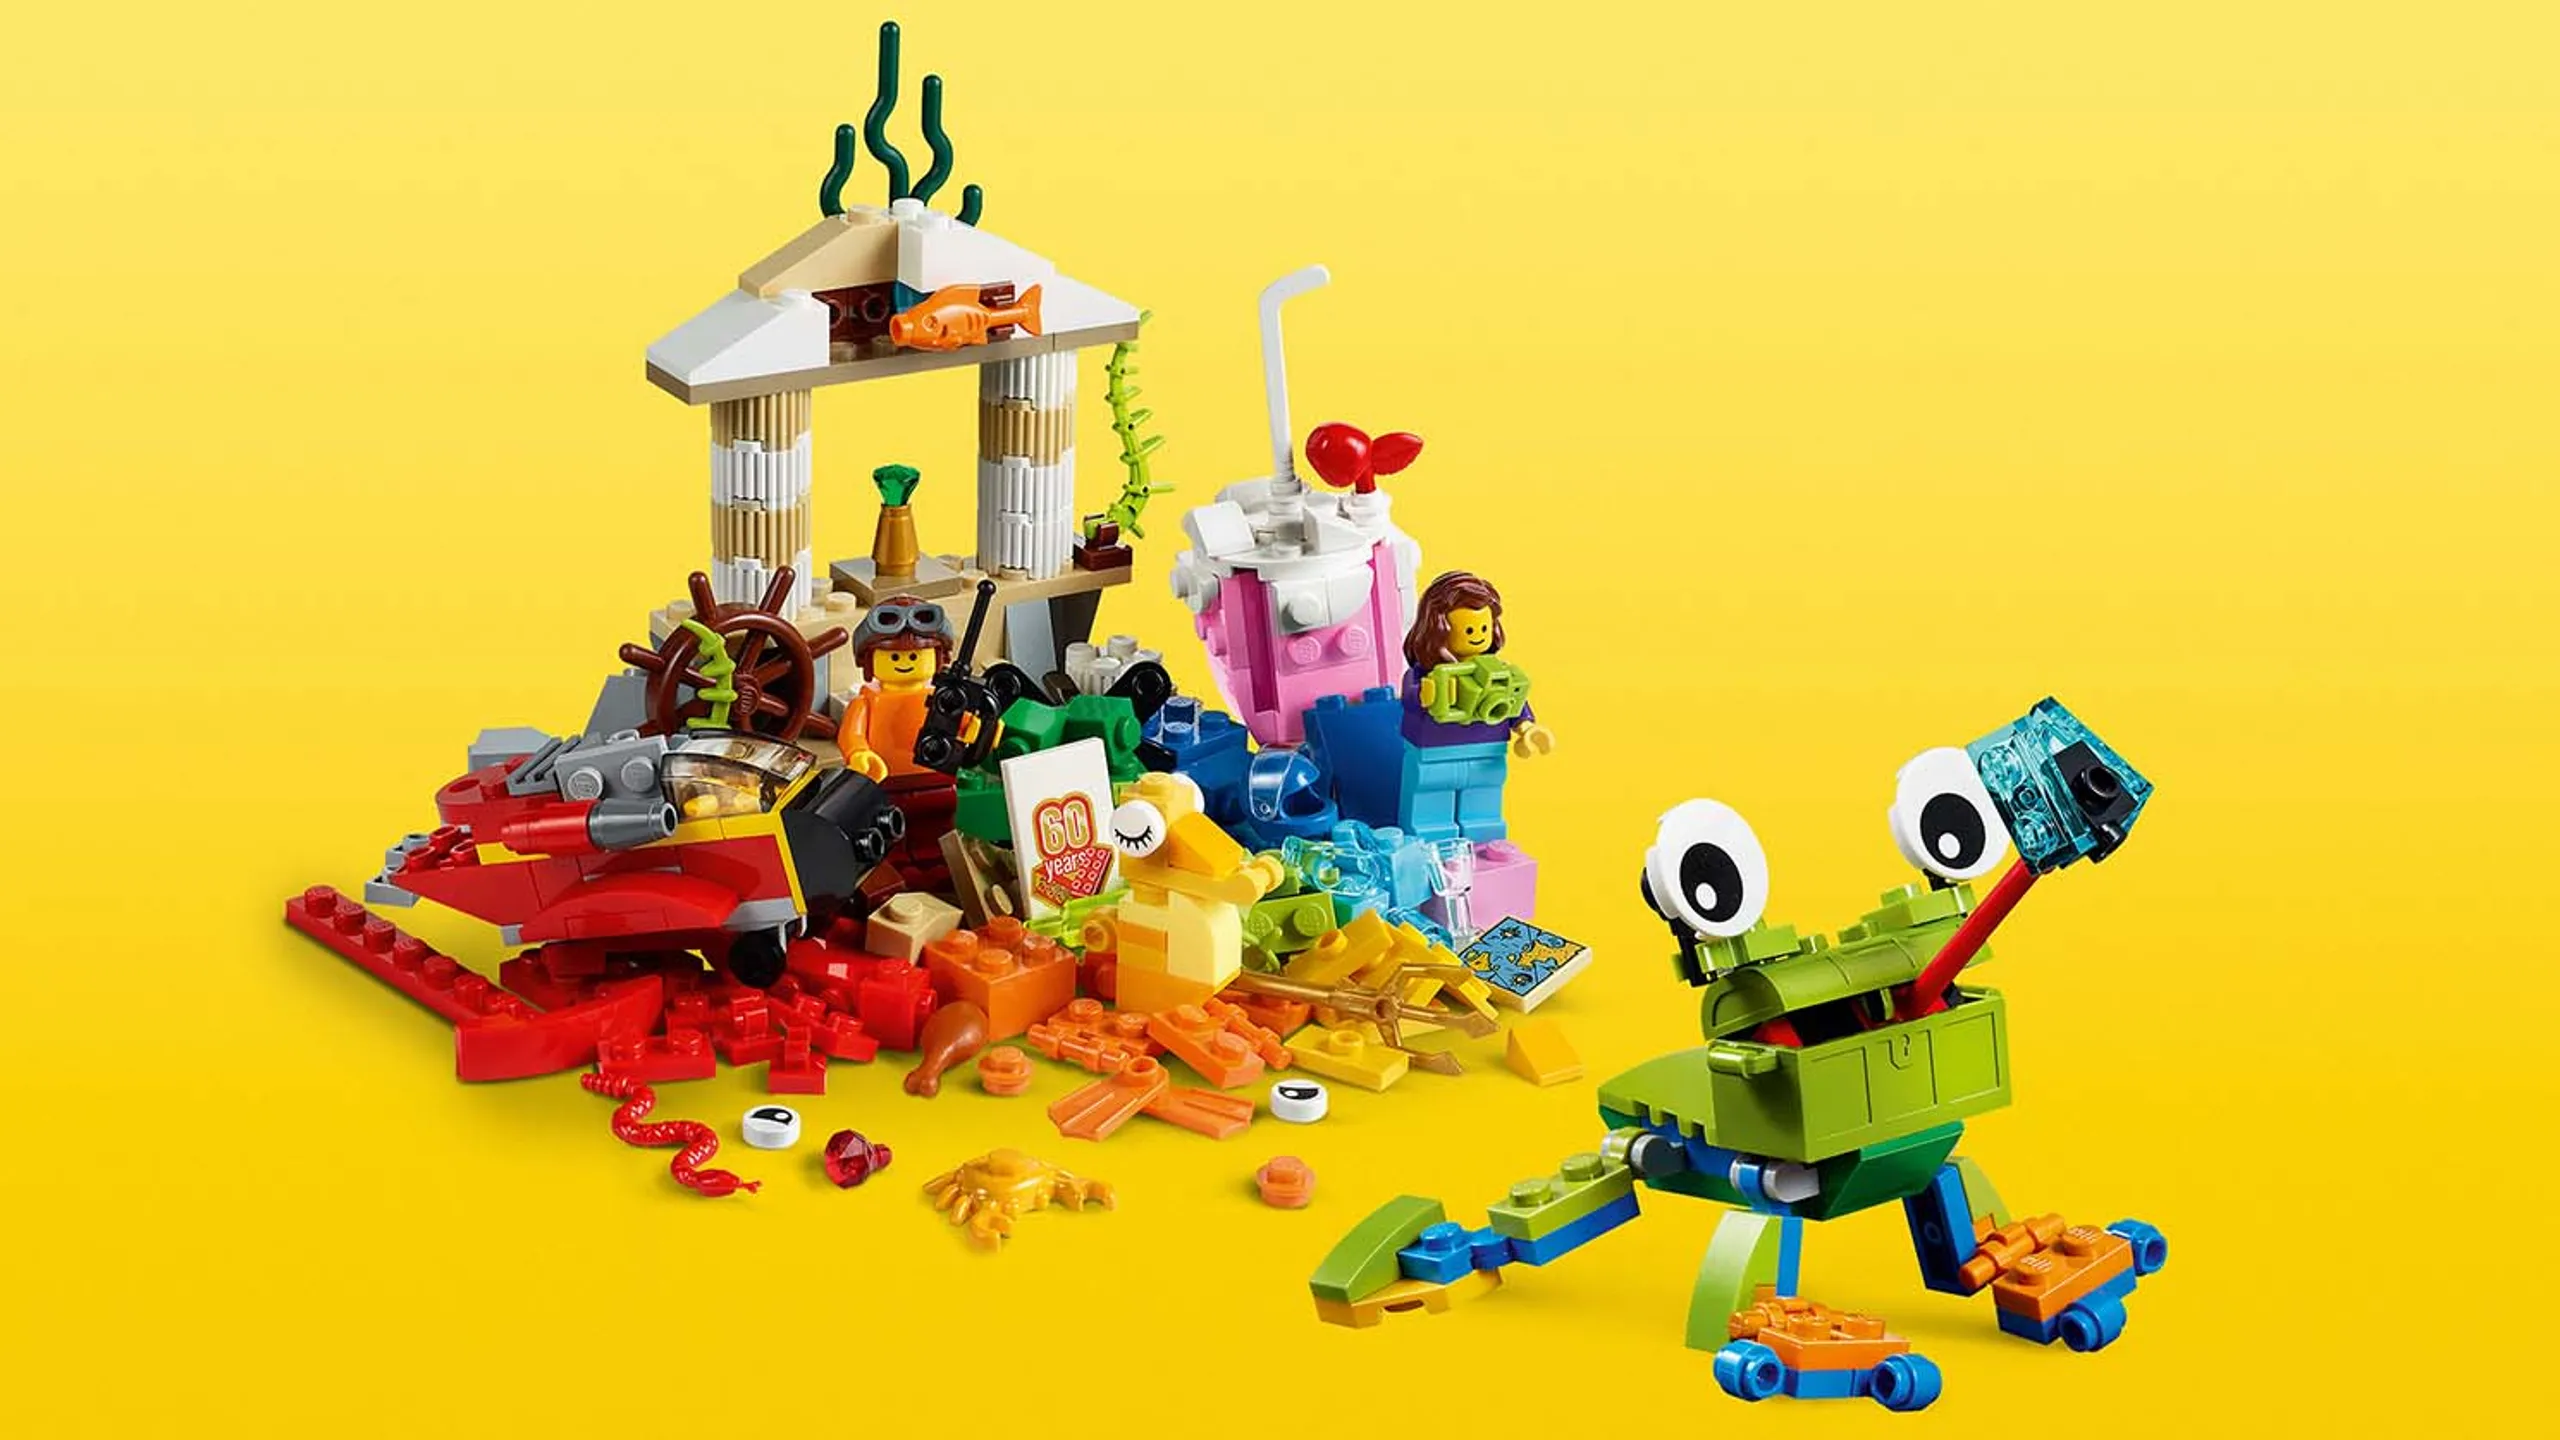 LEGO Classic: Caja Creativa Roja (10707) - Game Zone